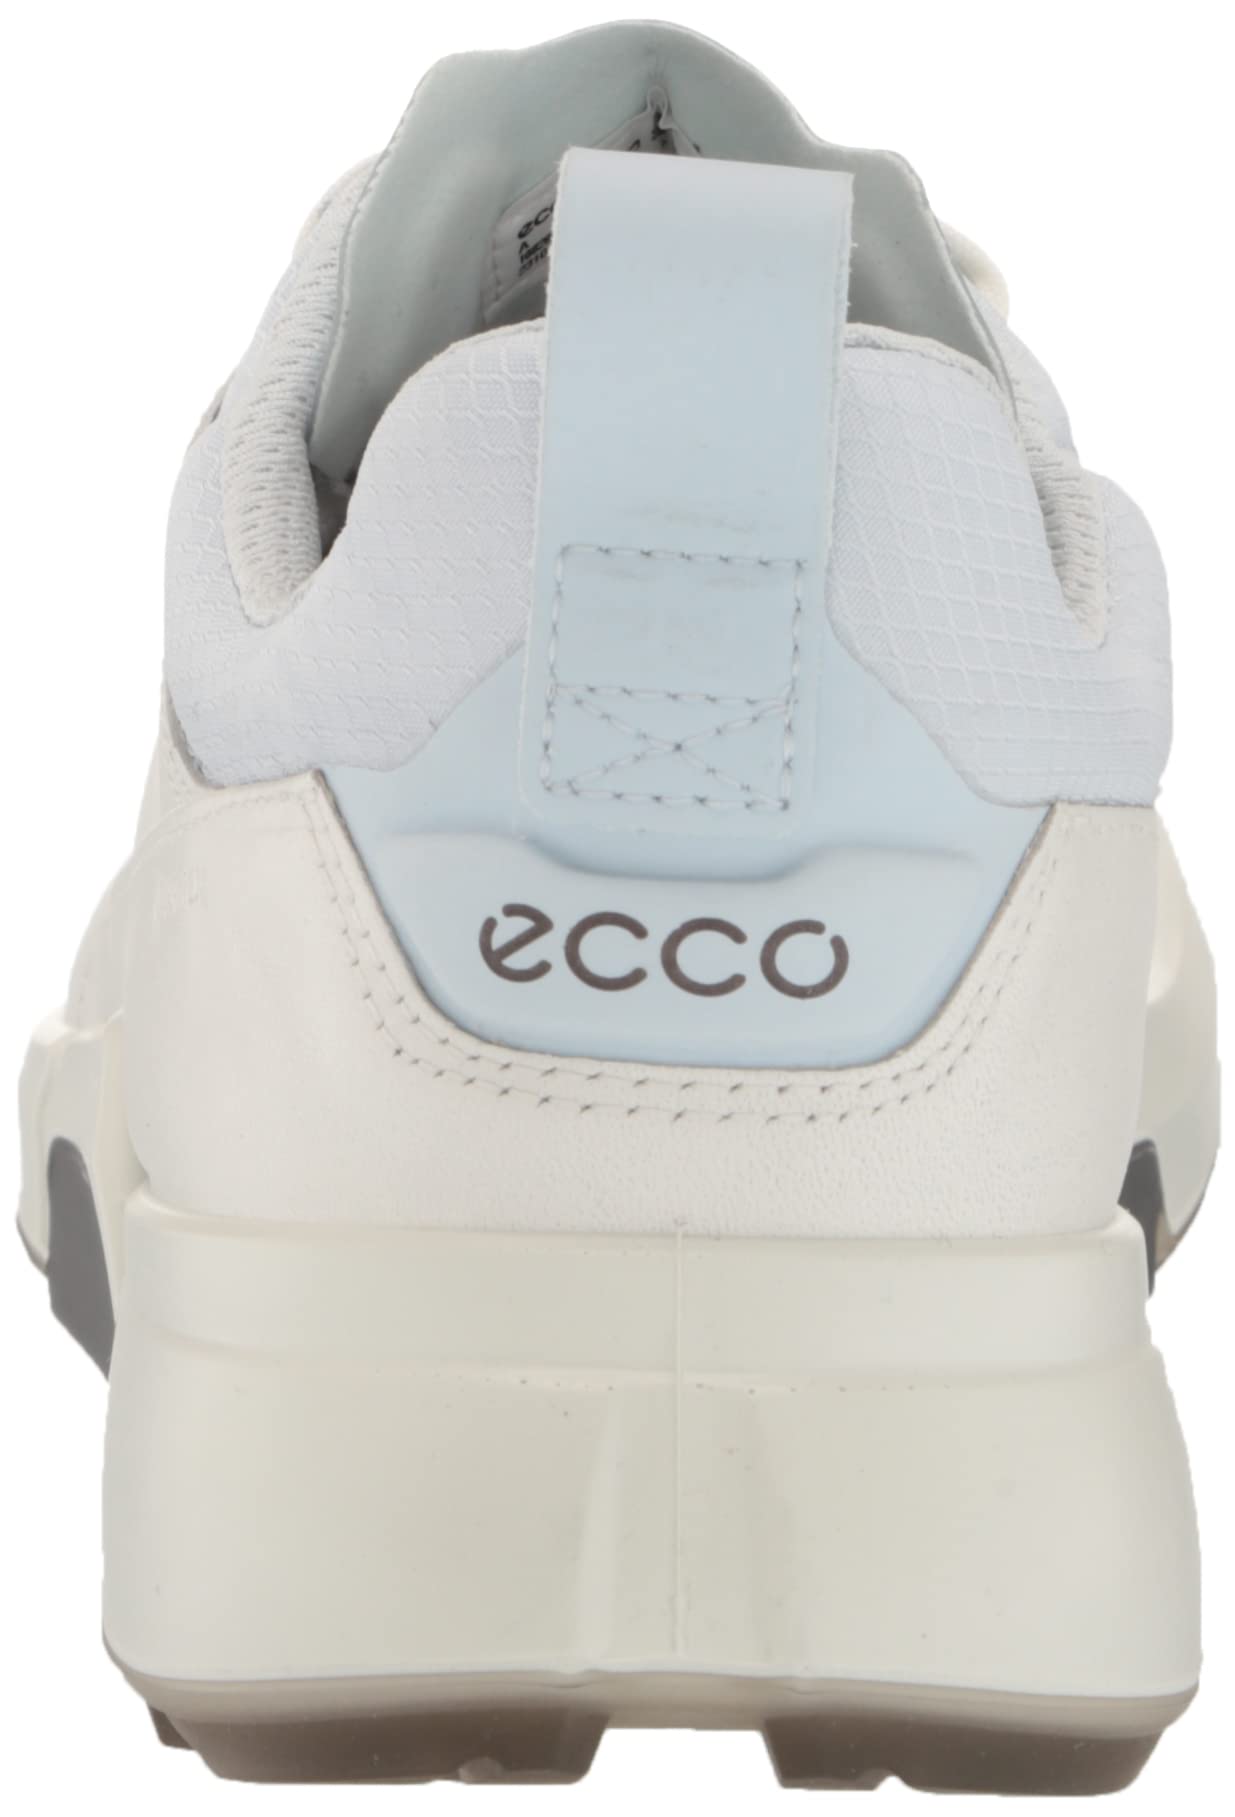 ECCO Men's Biom Hybrid 4 Gore-tex Waterproof Golf Shoe